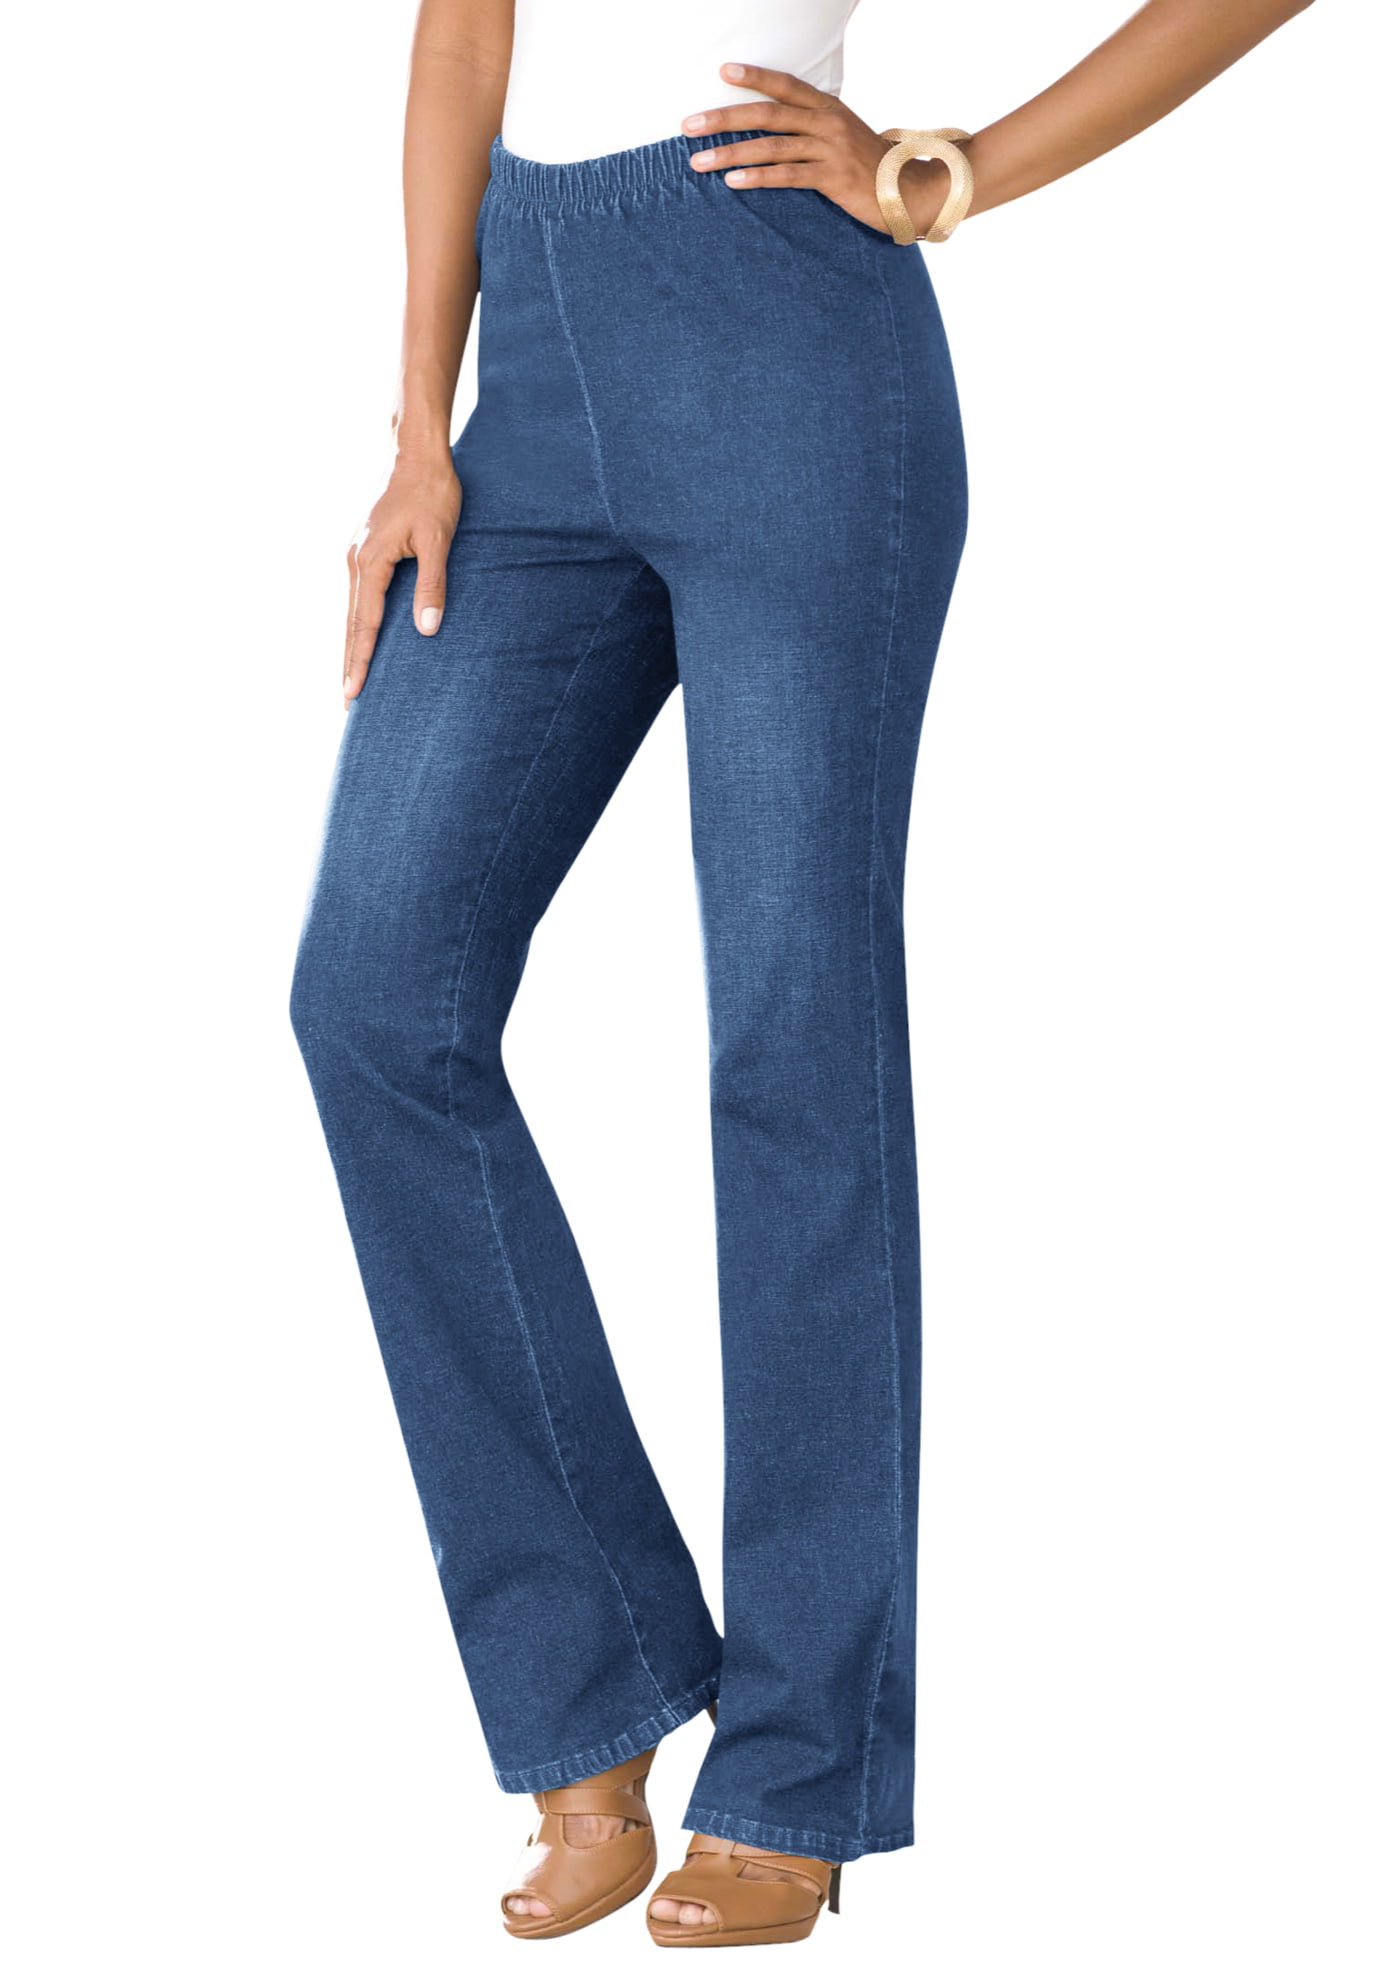 elastic waist jeans womens plus